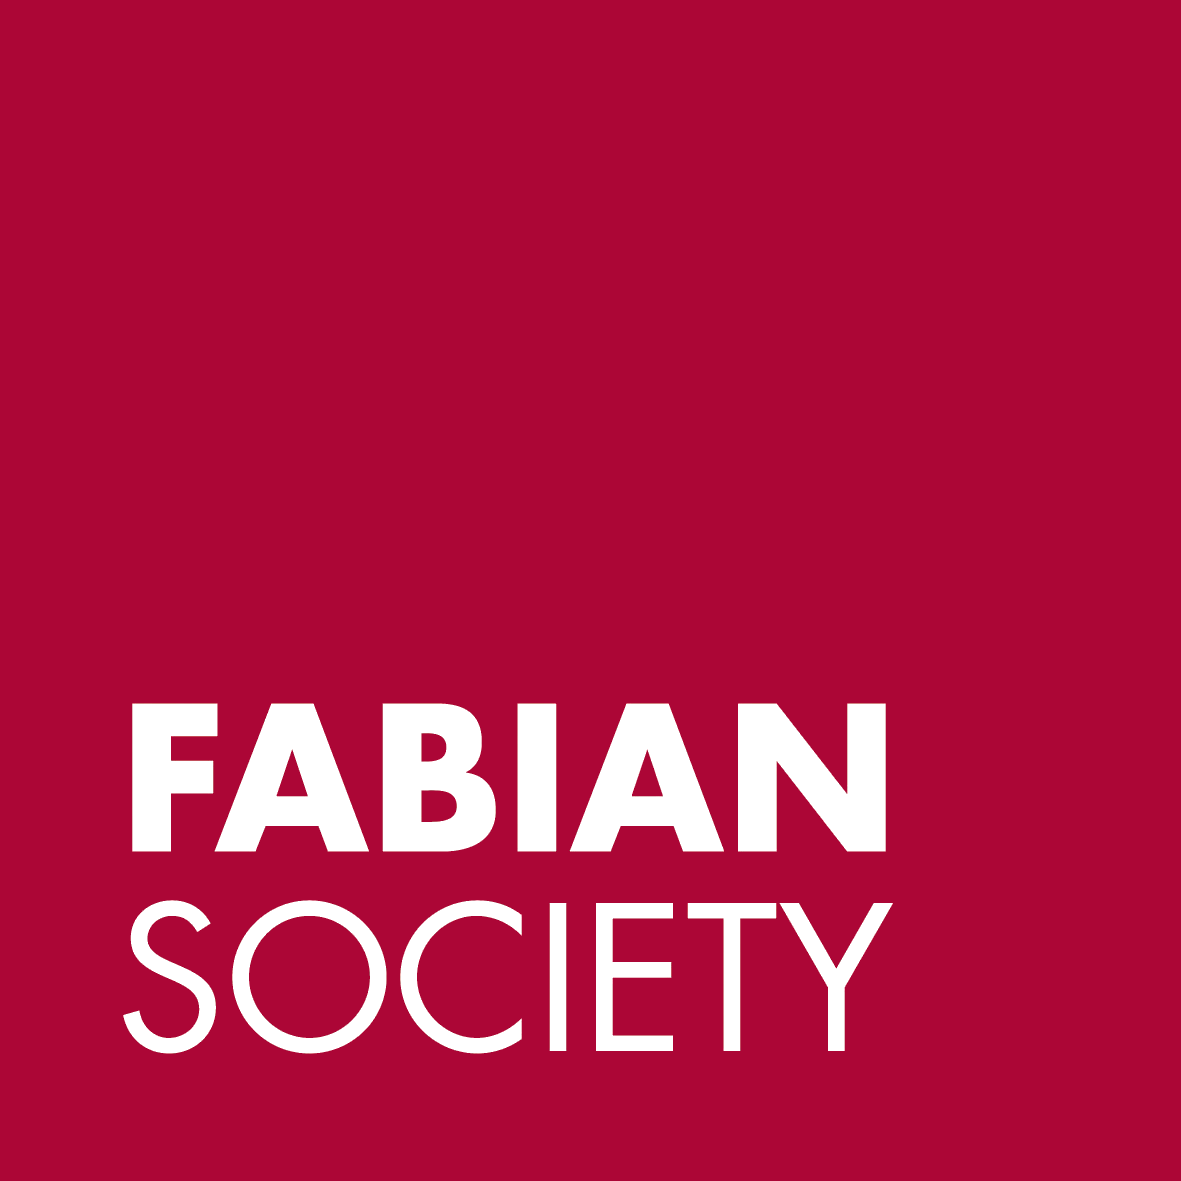 Fabian_Society_logo.png